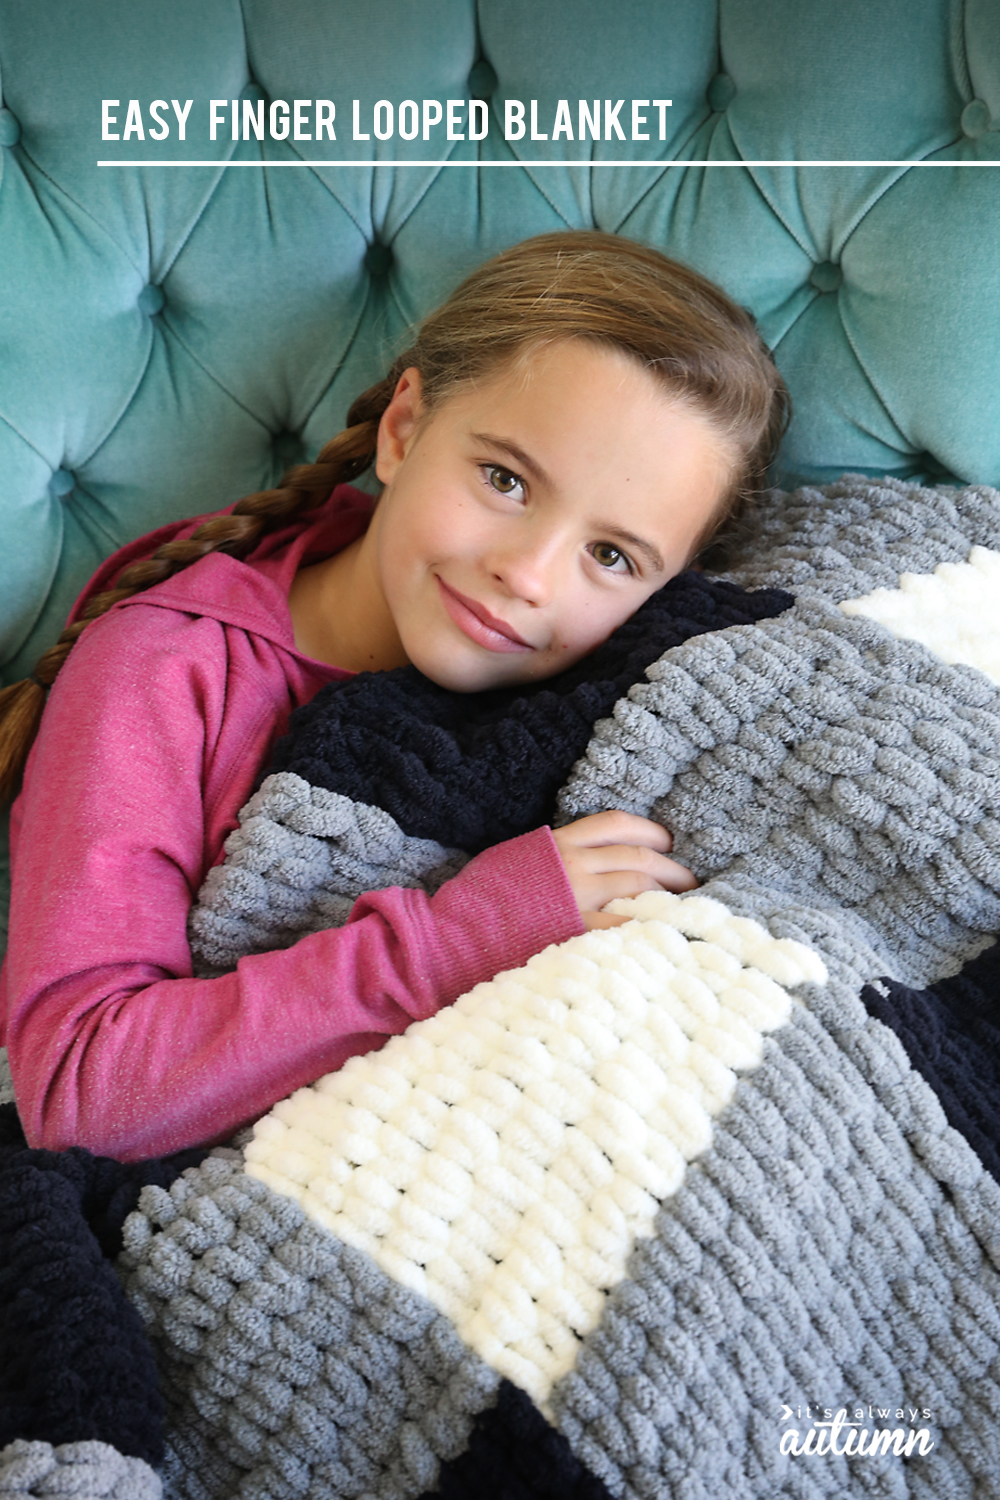 Girl snuggling with handmade blanket